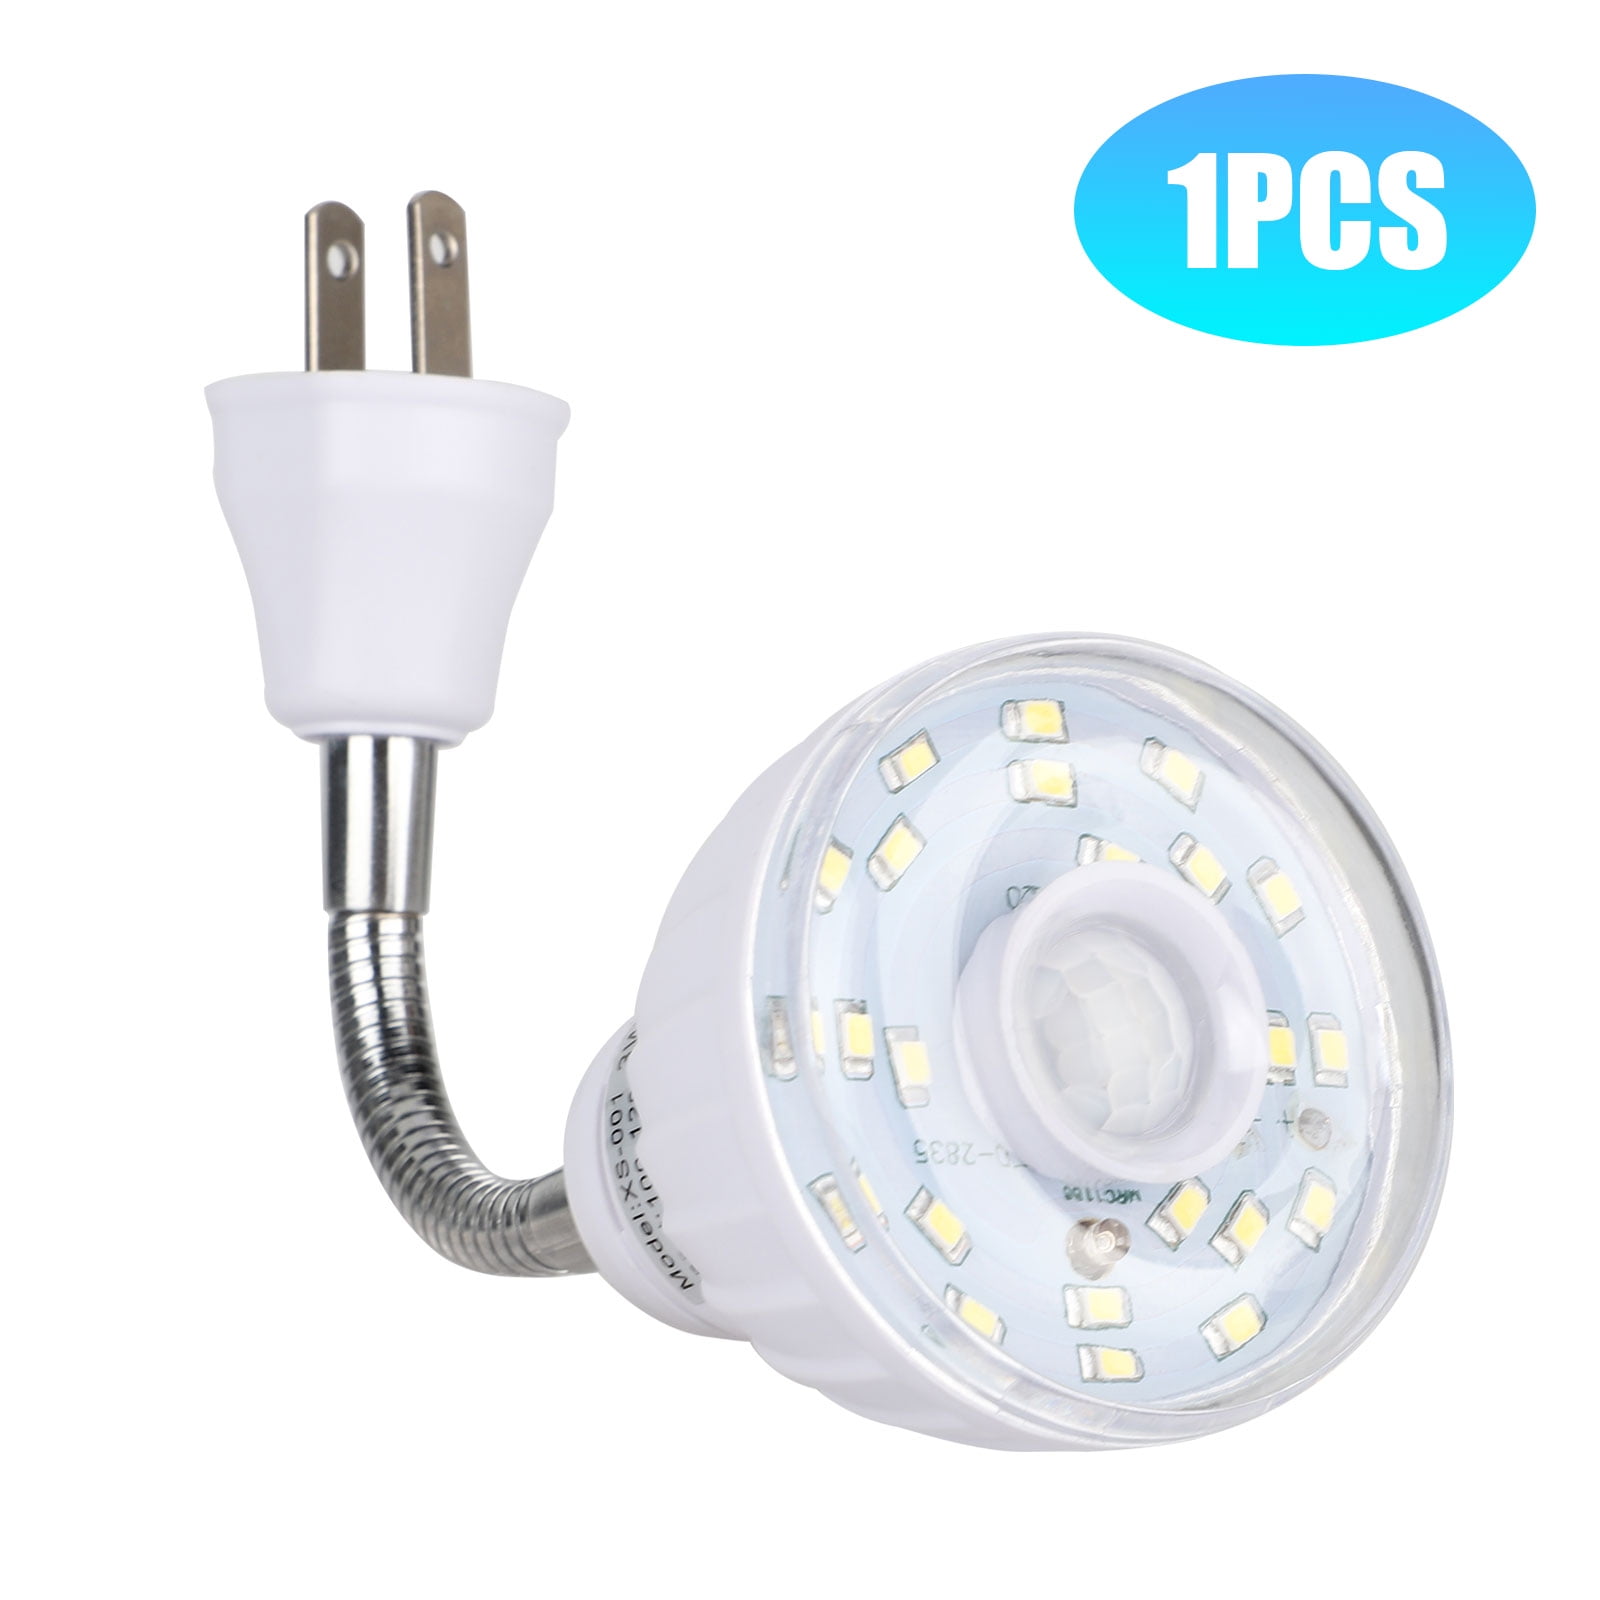 2/4 ×Plug-in Auto Sensor Control LED Night Light Lamp with Auto Sensor 